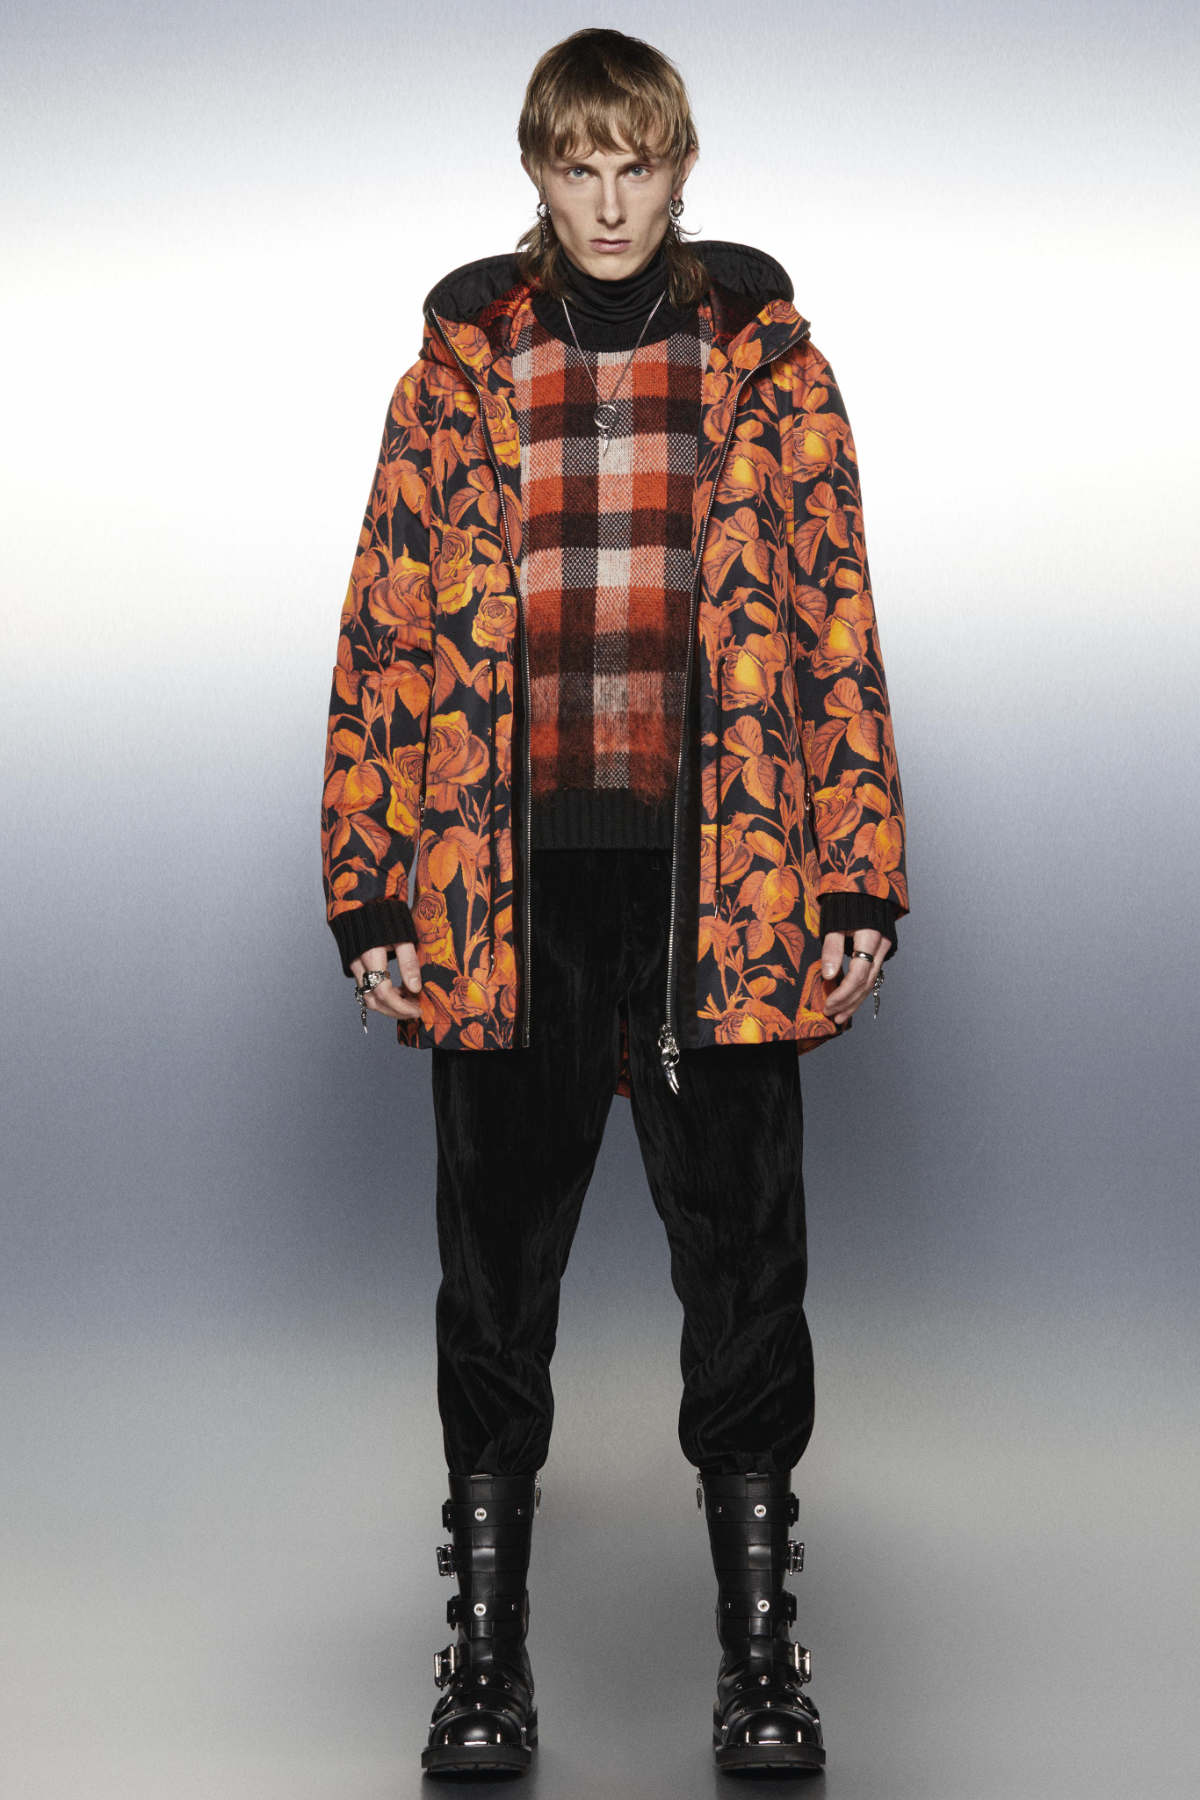 Roberto Cavalli Presents Its New Men’s Fall/Winter 2022-23 Collection